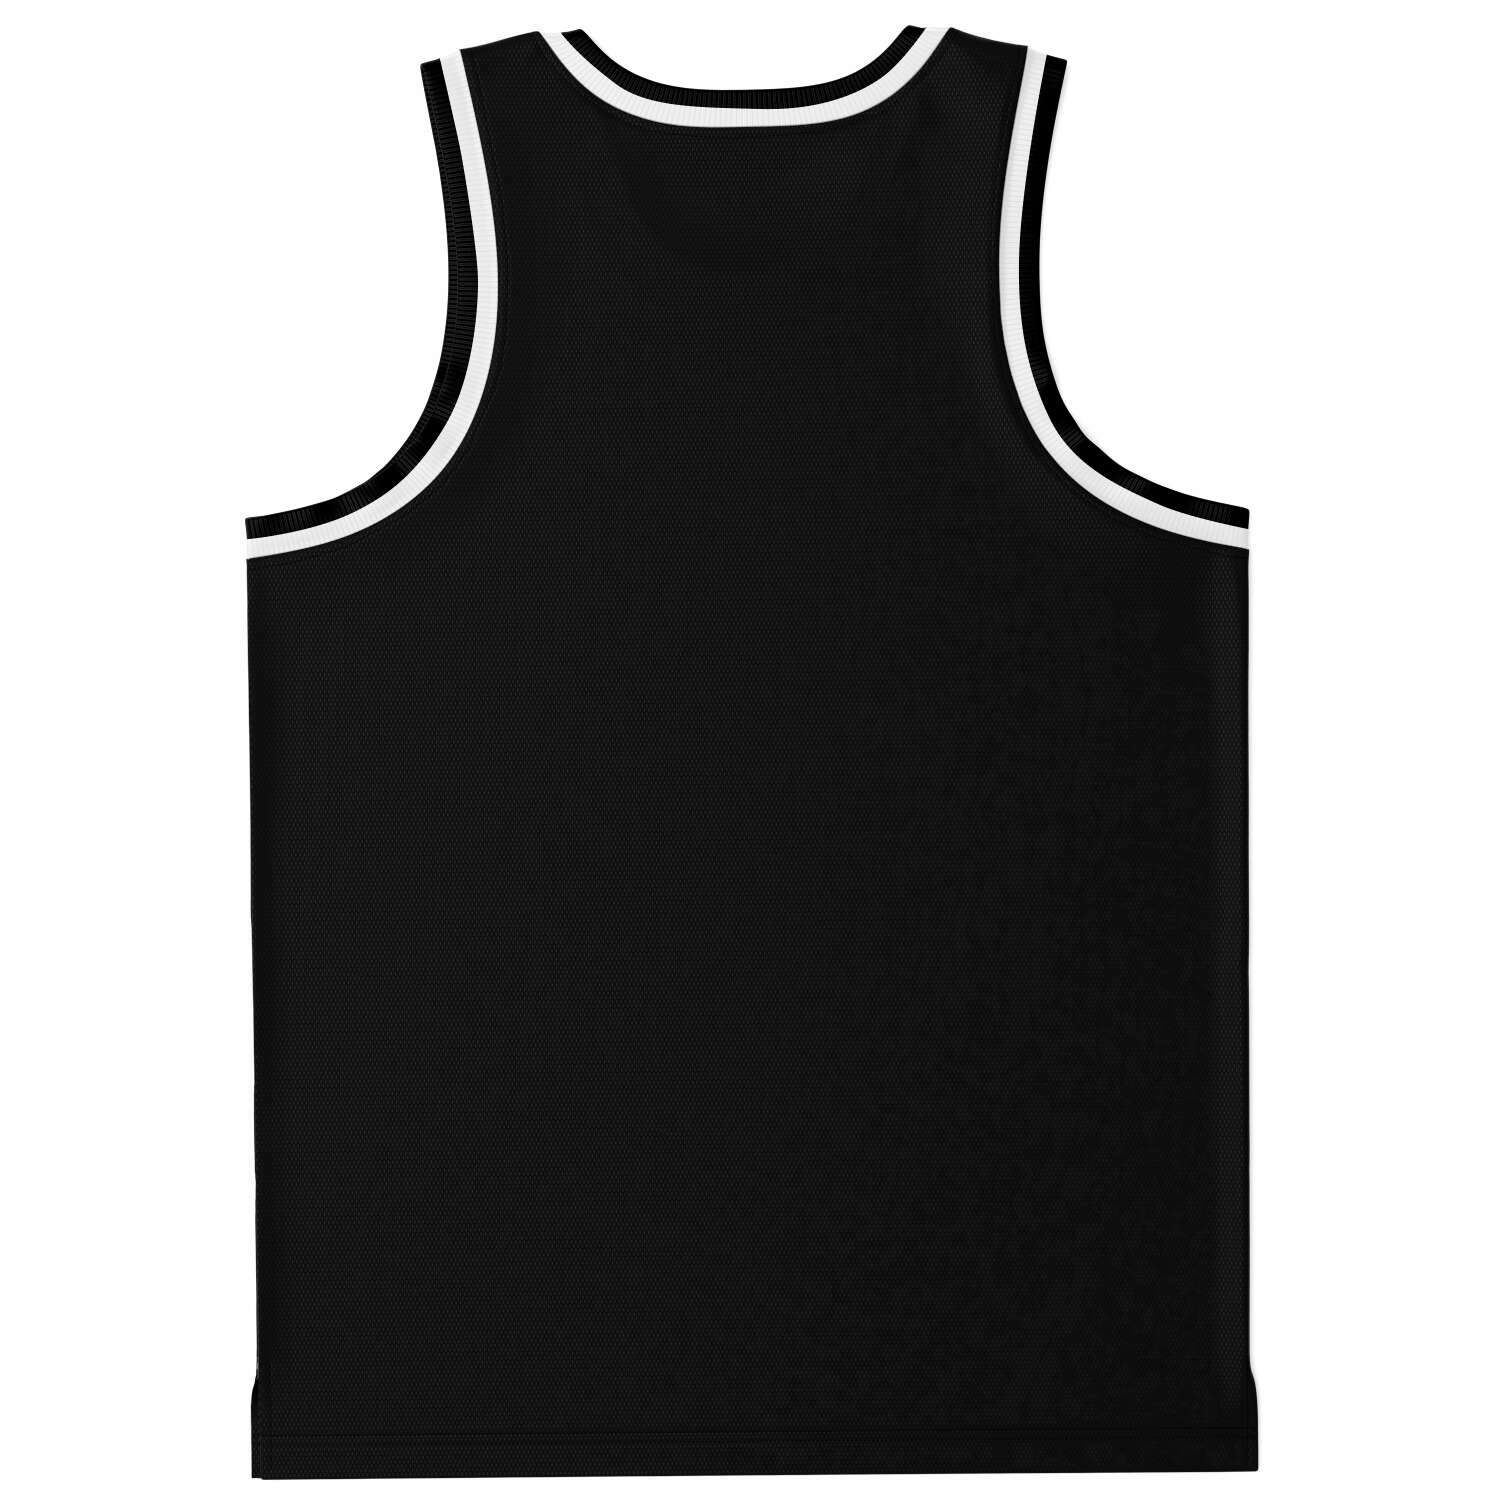 Shop Mens Plain Basketball Jersey Gym Sports Basic Blank